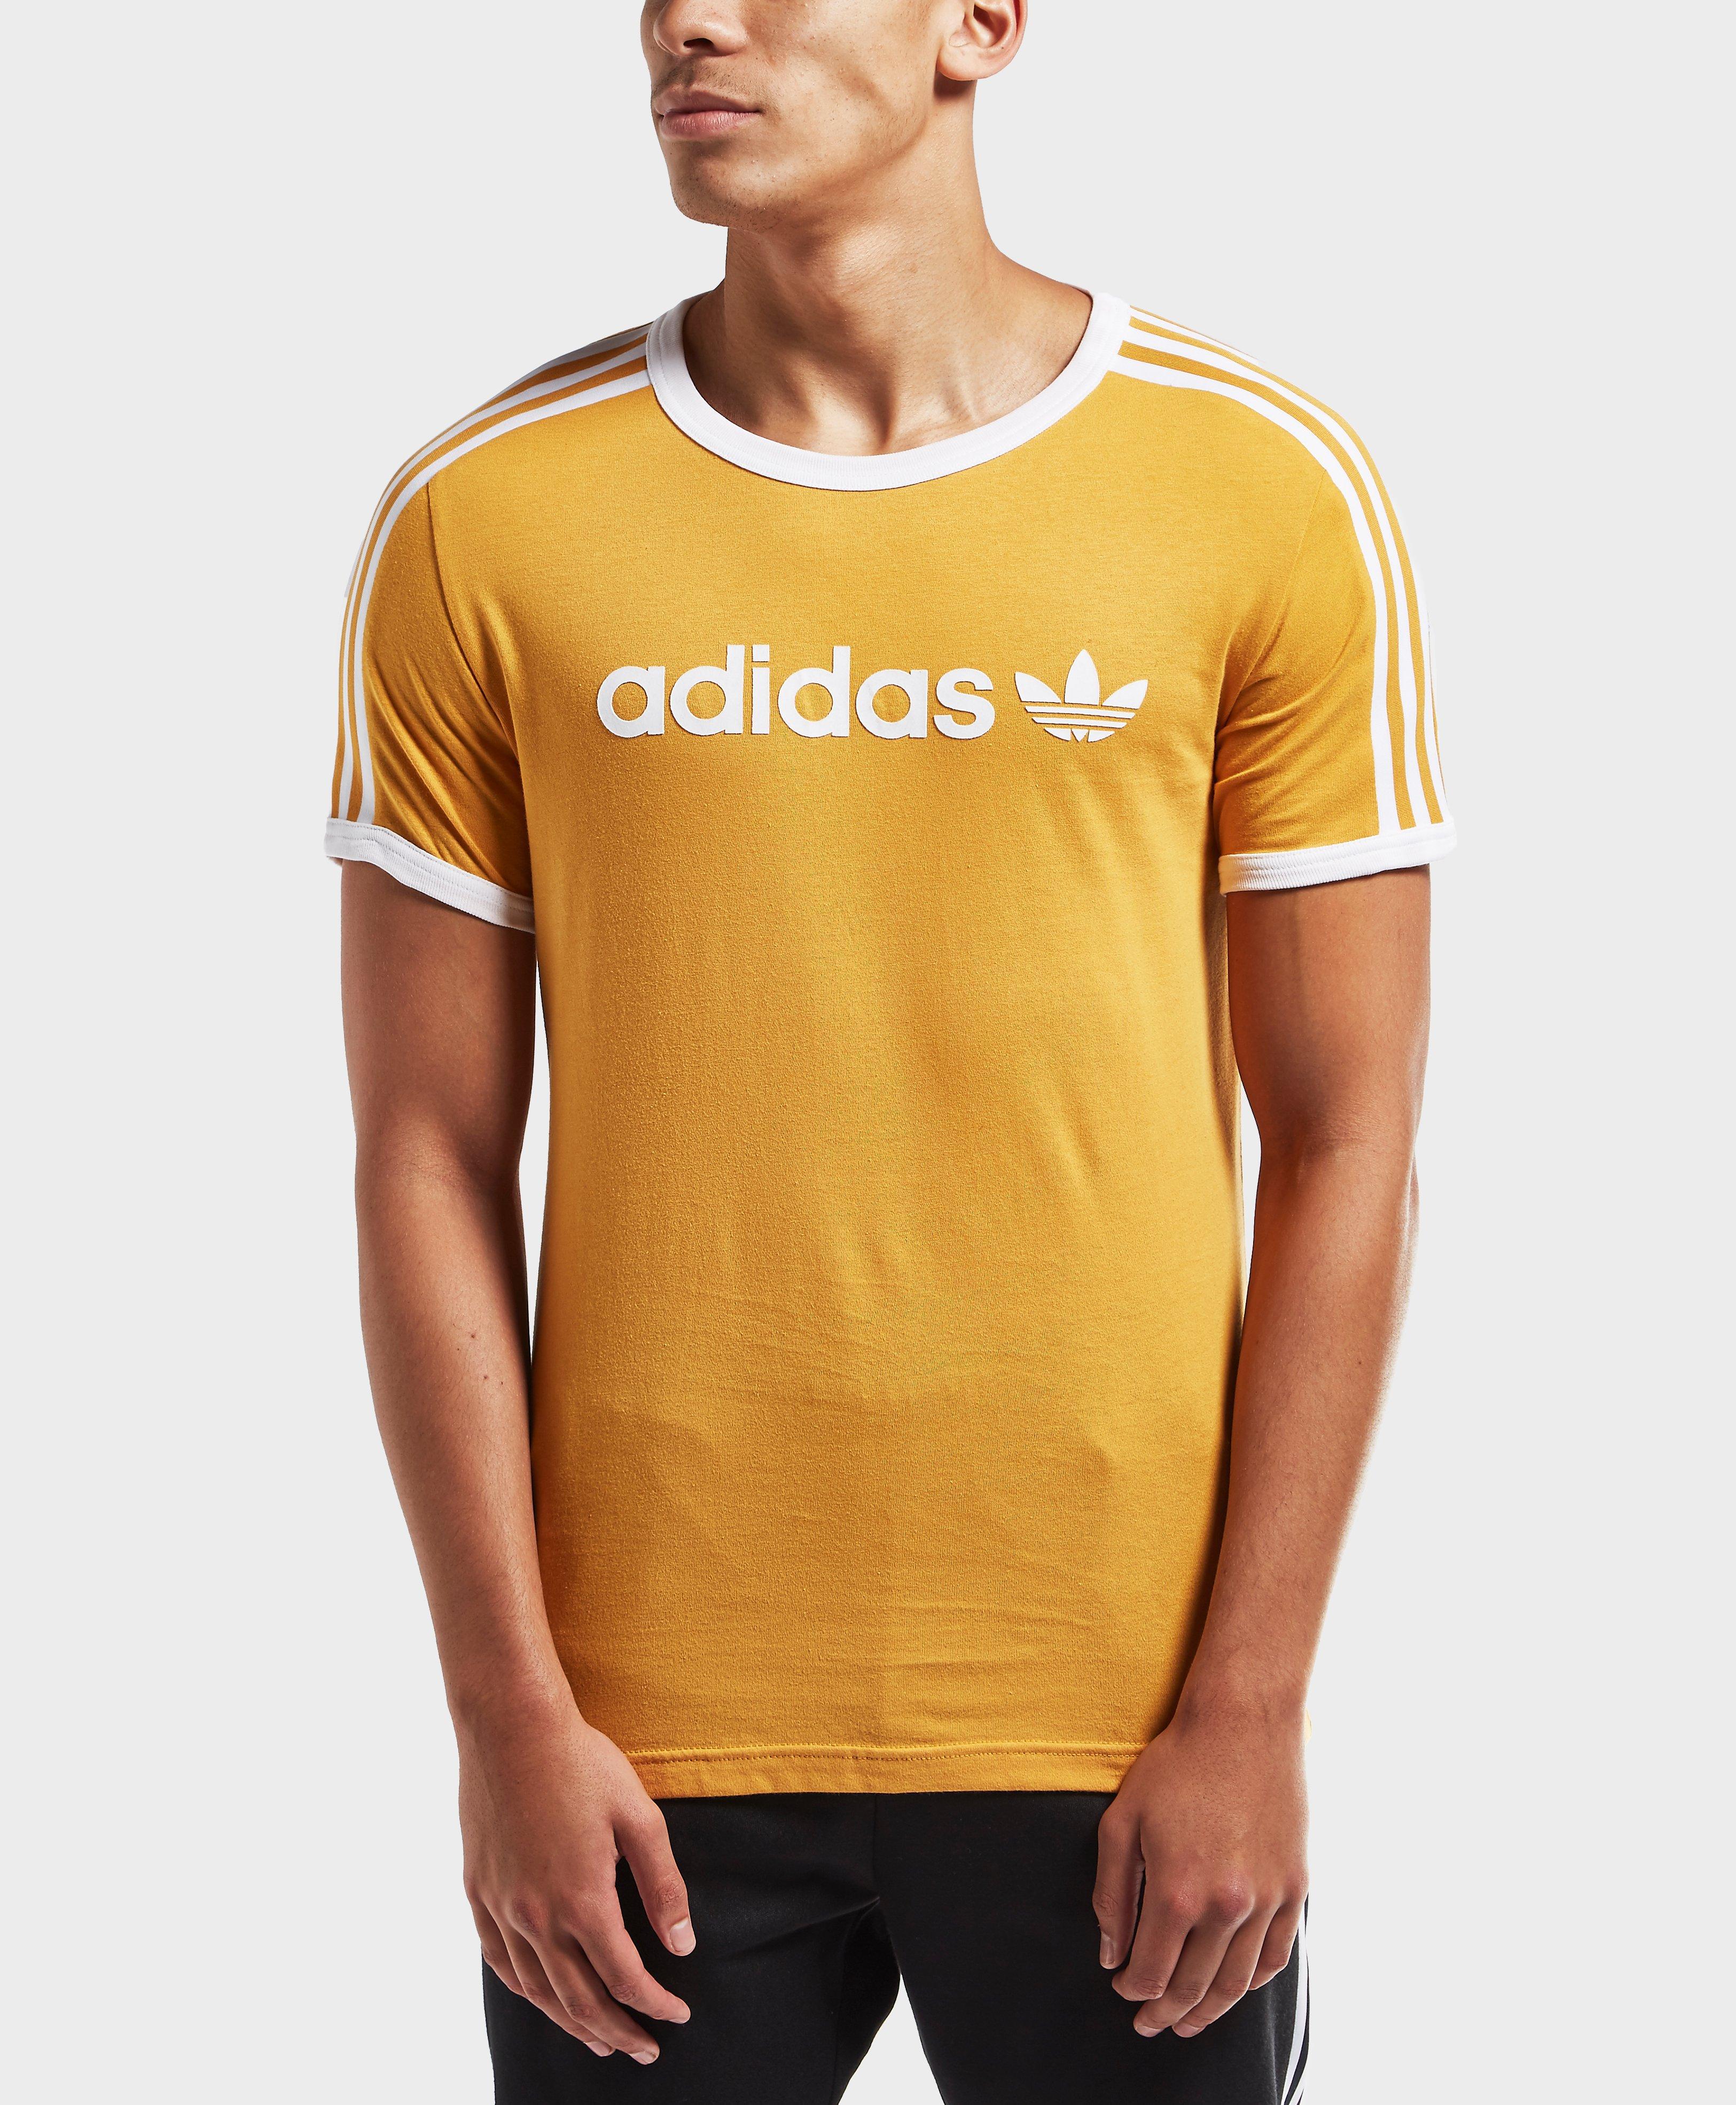 adidas originals yellow t shirt